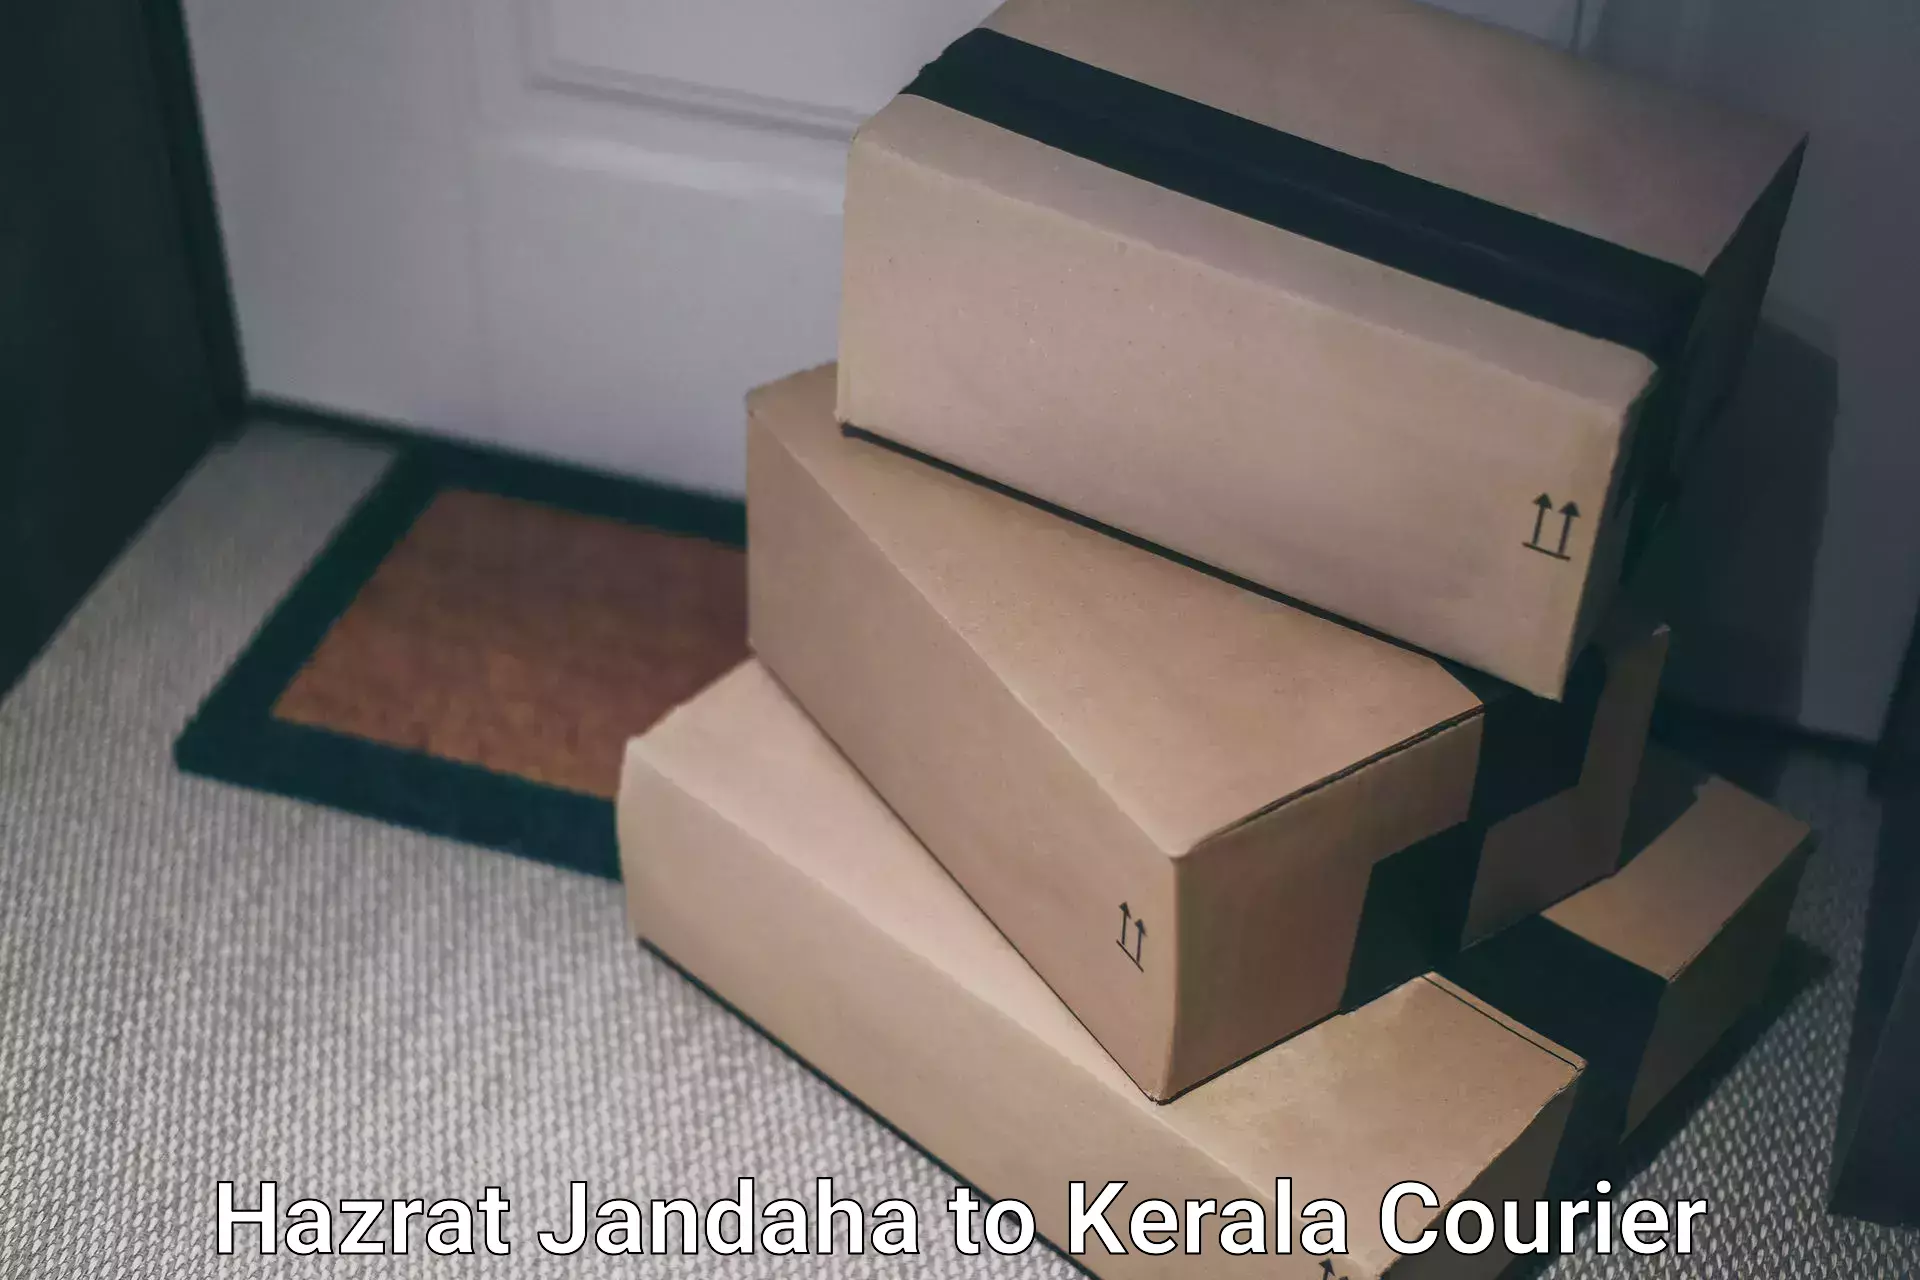 State-of-the-art courier technology Hazrat Jandaha to Kerala